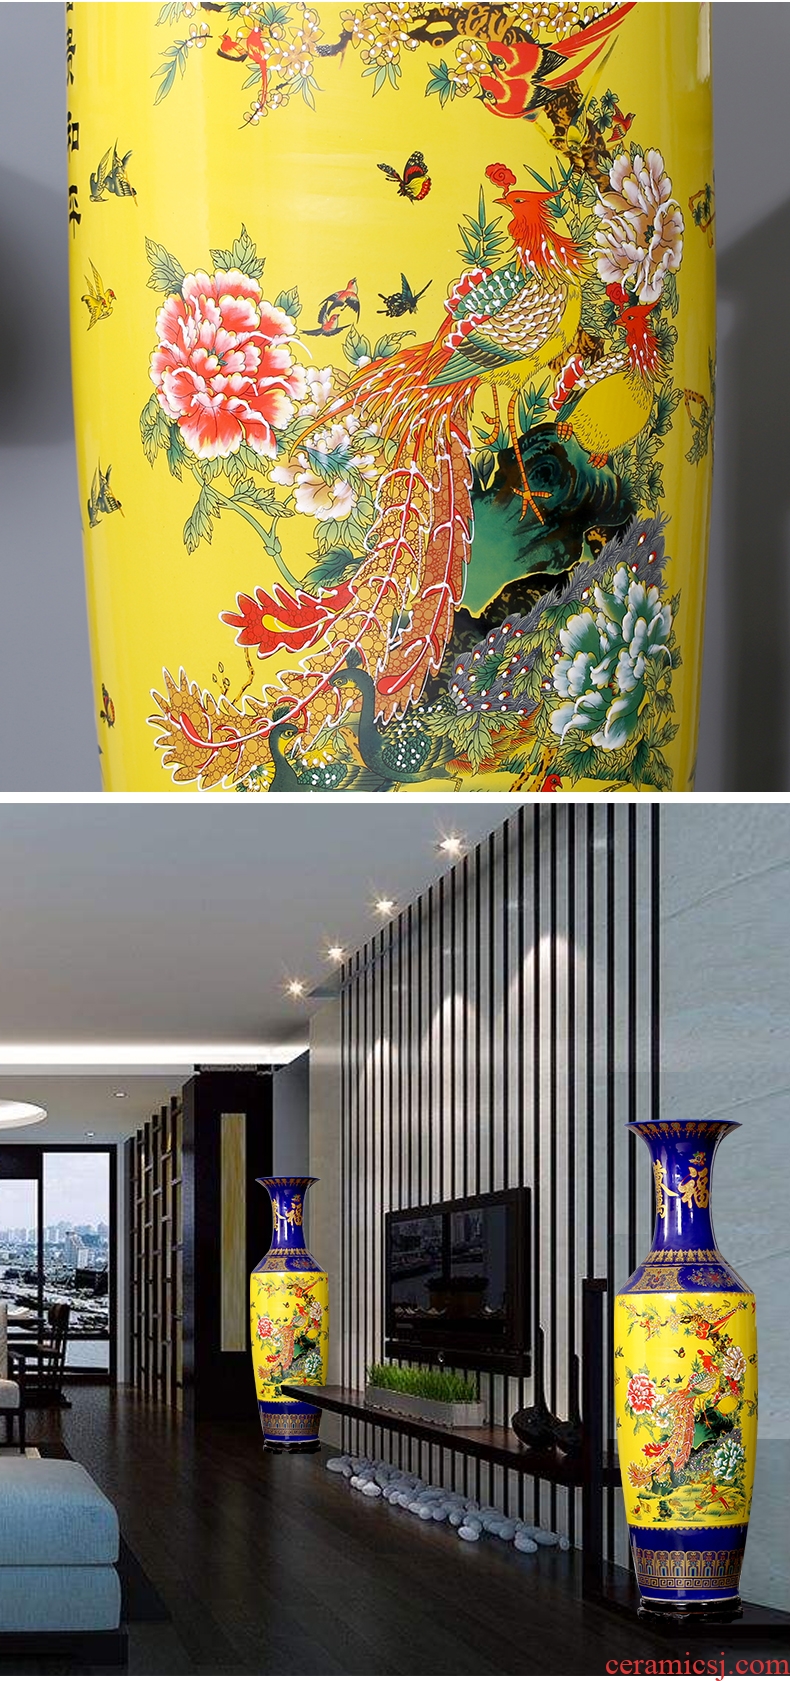 Imitation of classical jingdezhen ceramics celadon art big vase retro ears dry flower vase creative furnishing articles - 528819322101